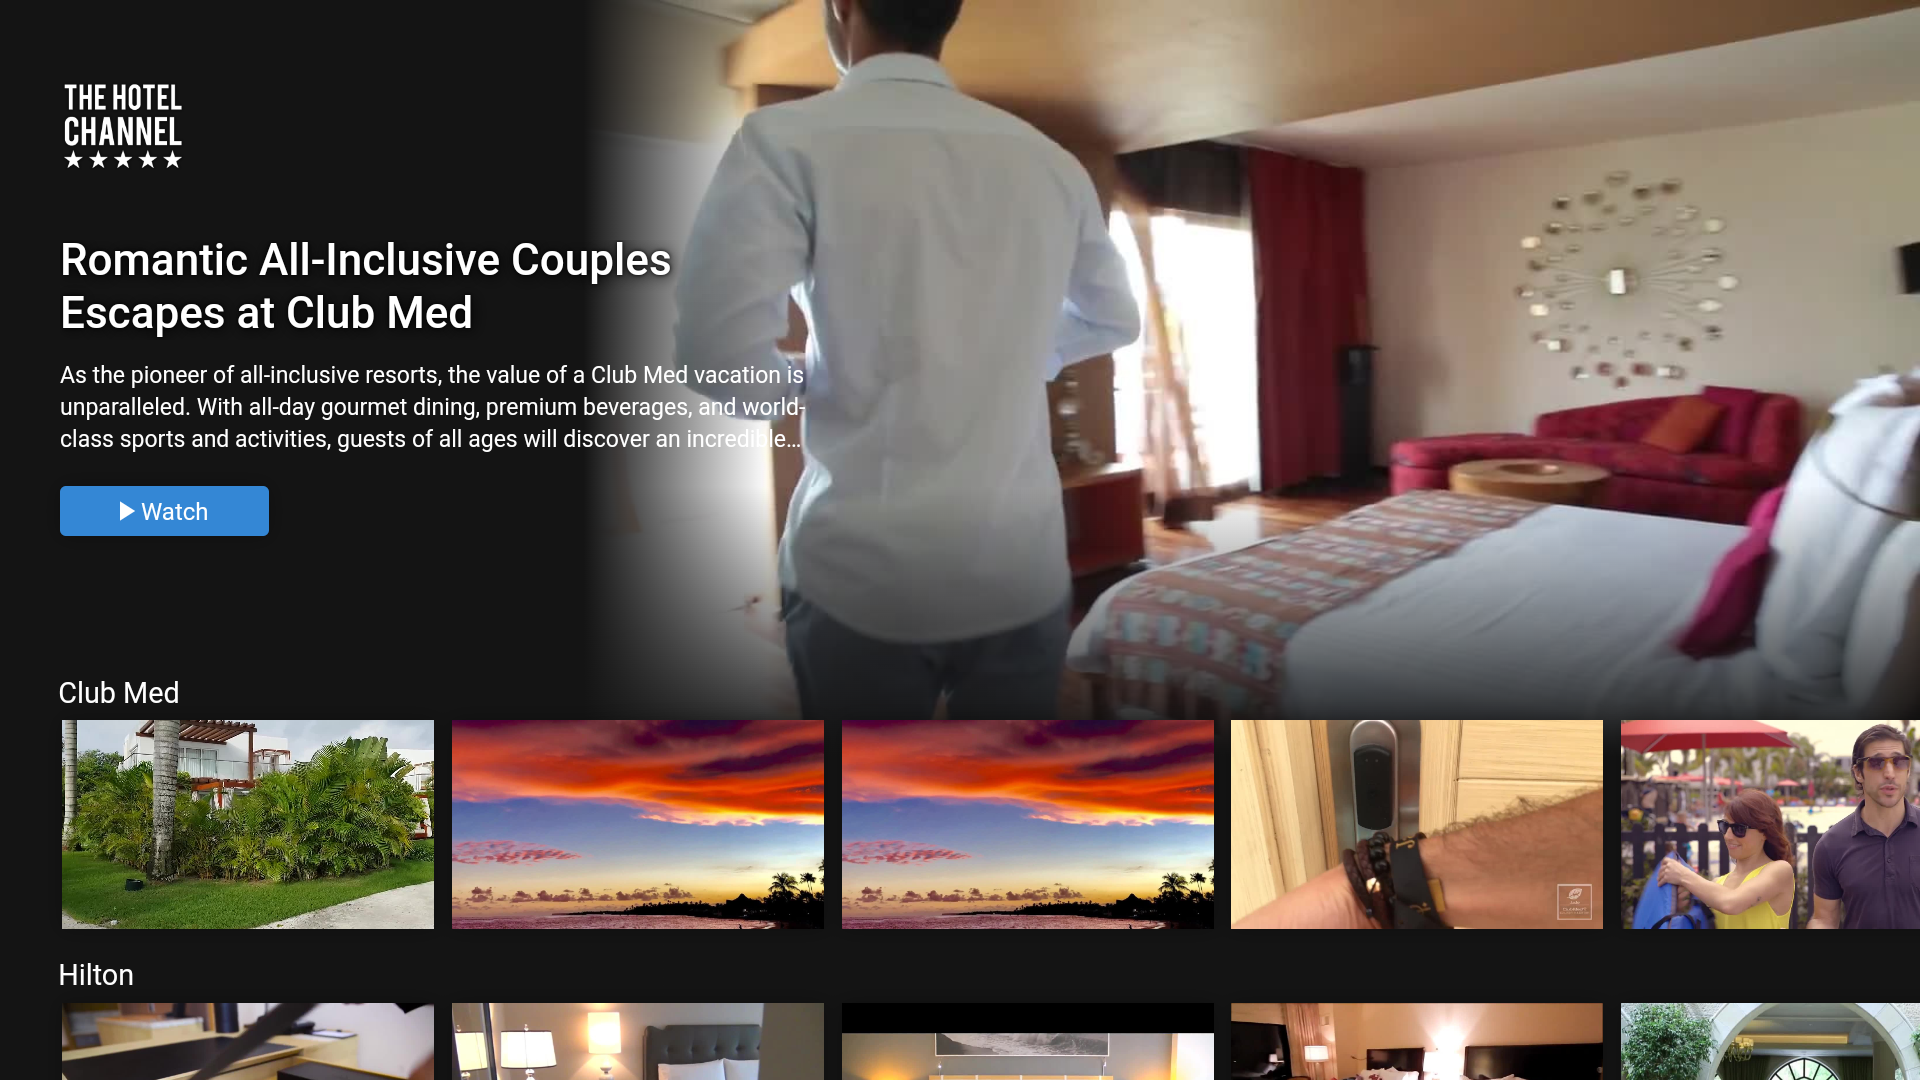 The Hotel Channel Screenshot 001